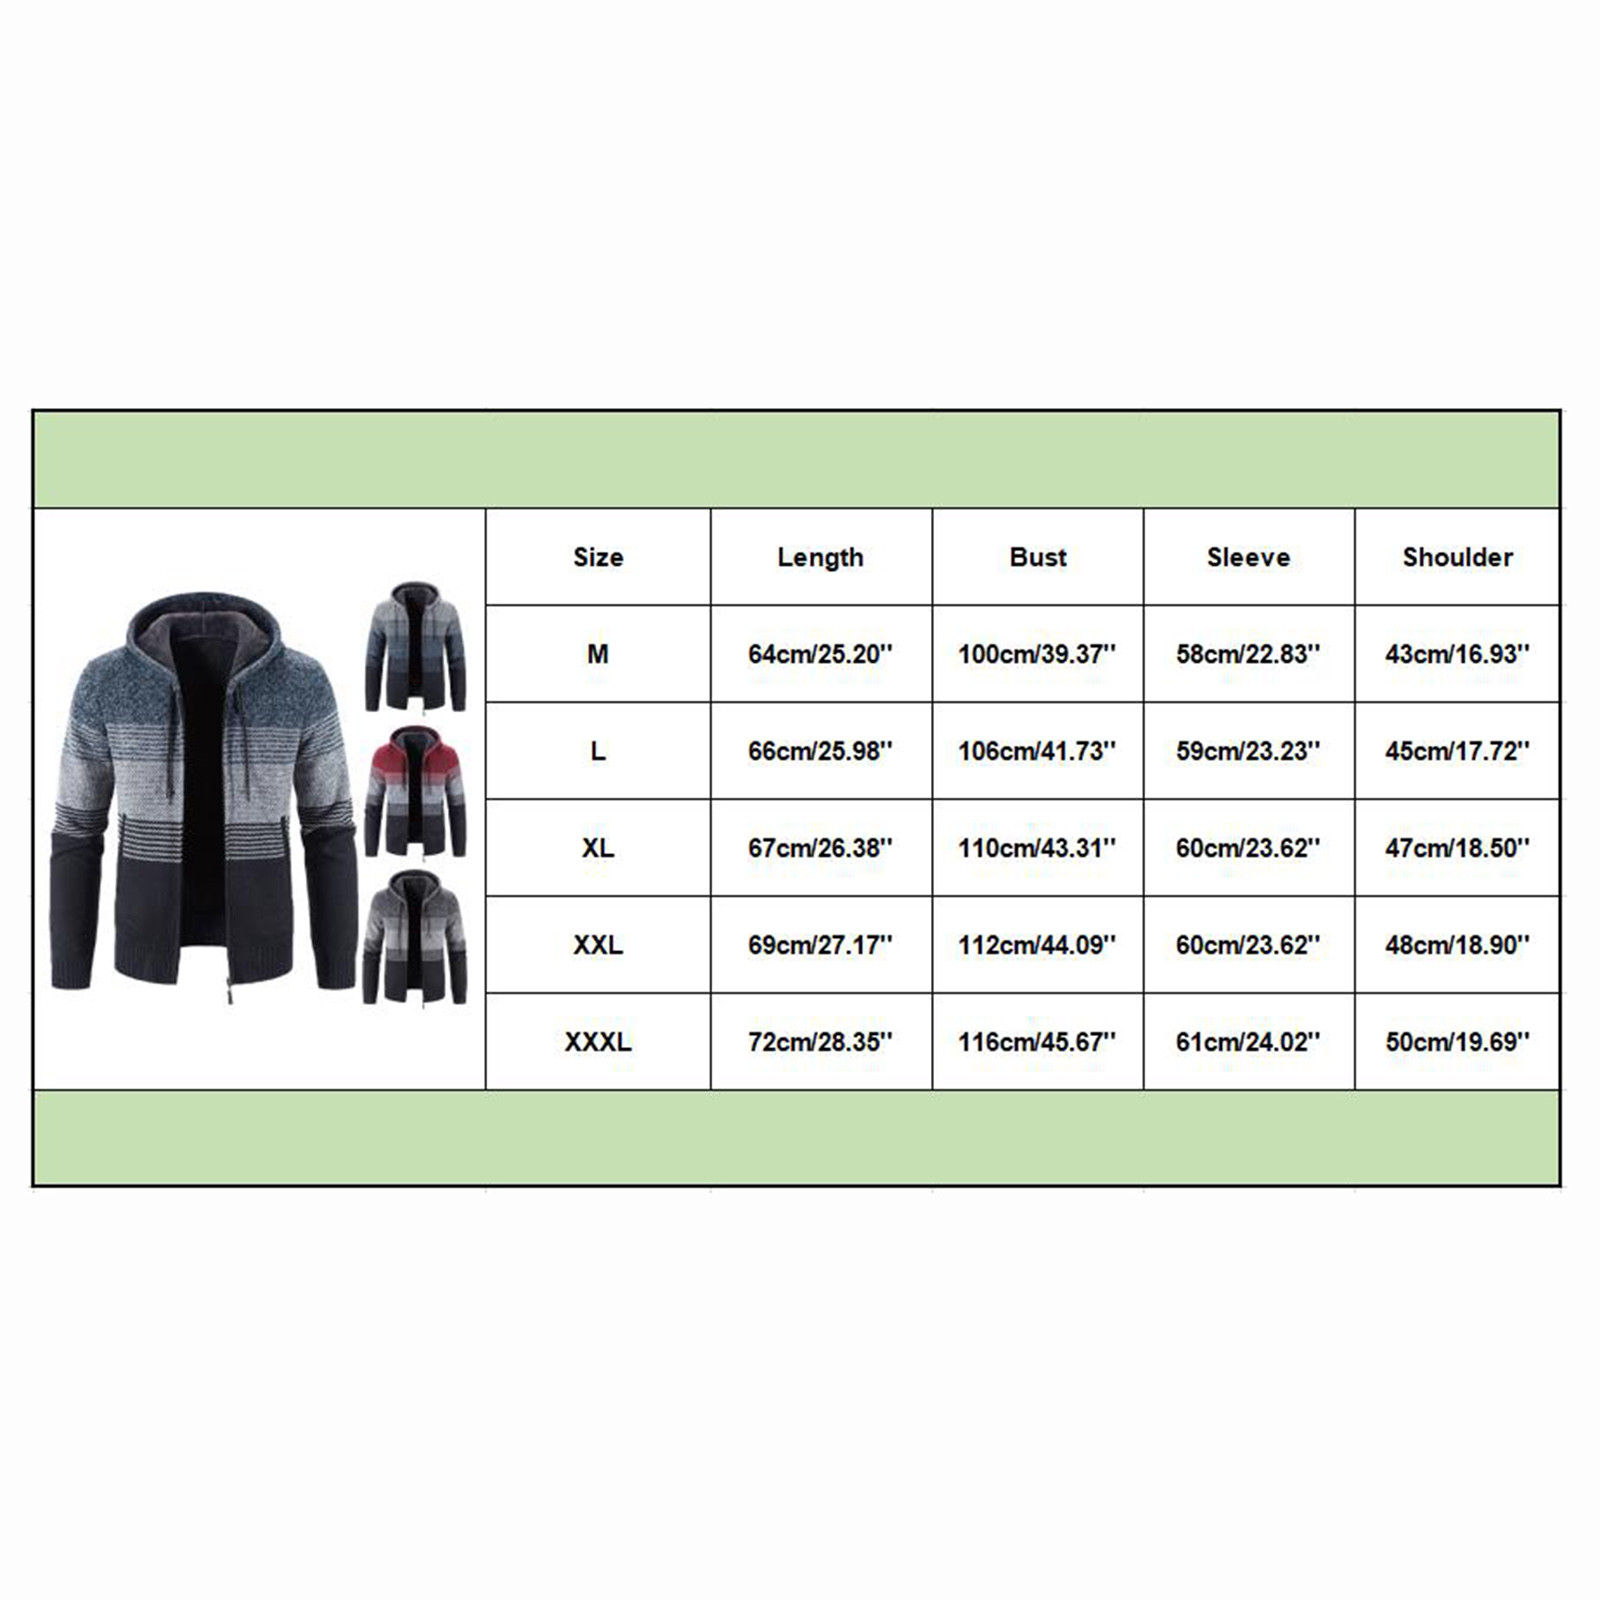 LEEy-world Light Winter Jackets for Men Men's Coats Winter Thicken Cotton Tactical Work Jackets with Hood Dark Gray,3XL - image 2 of 3